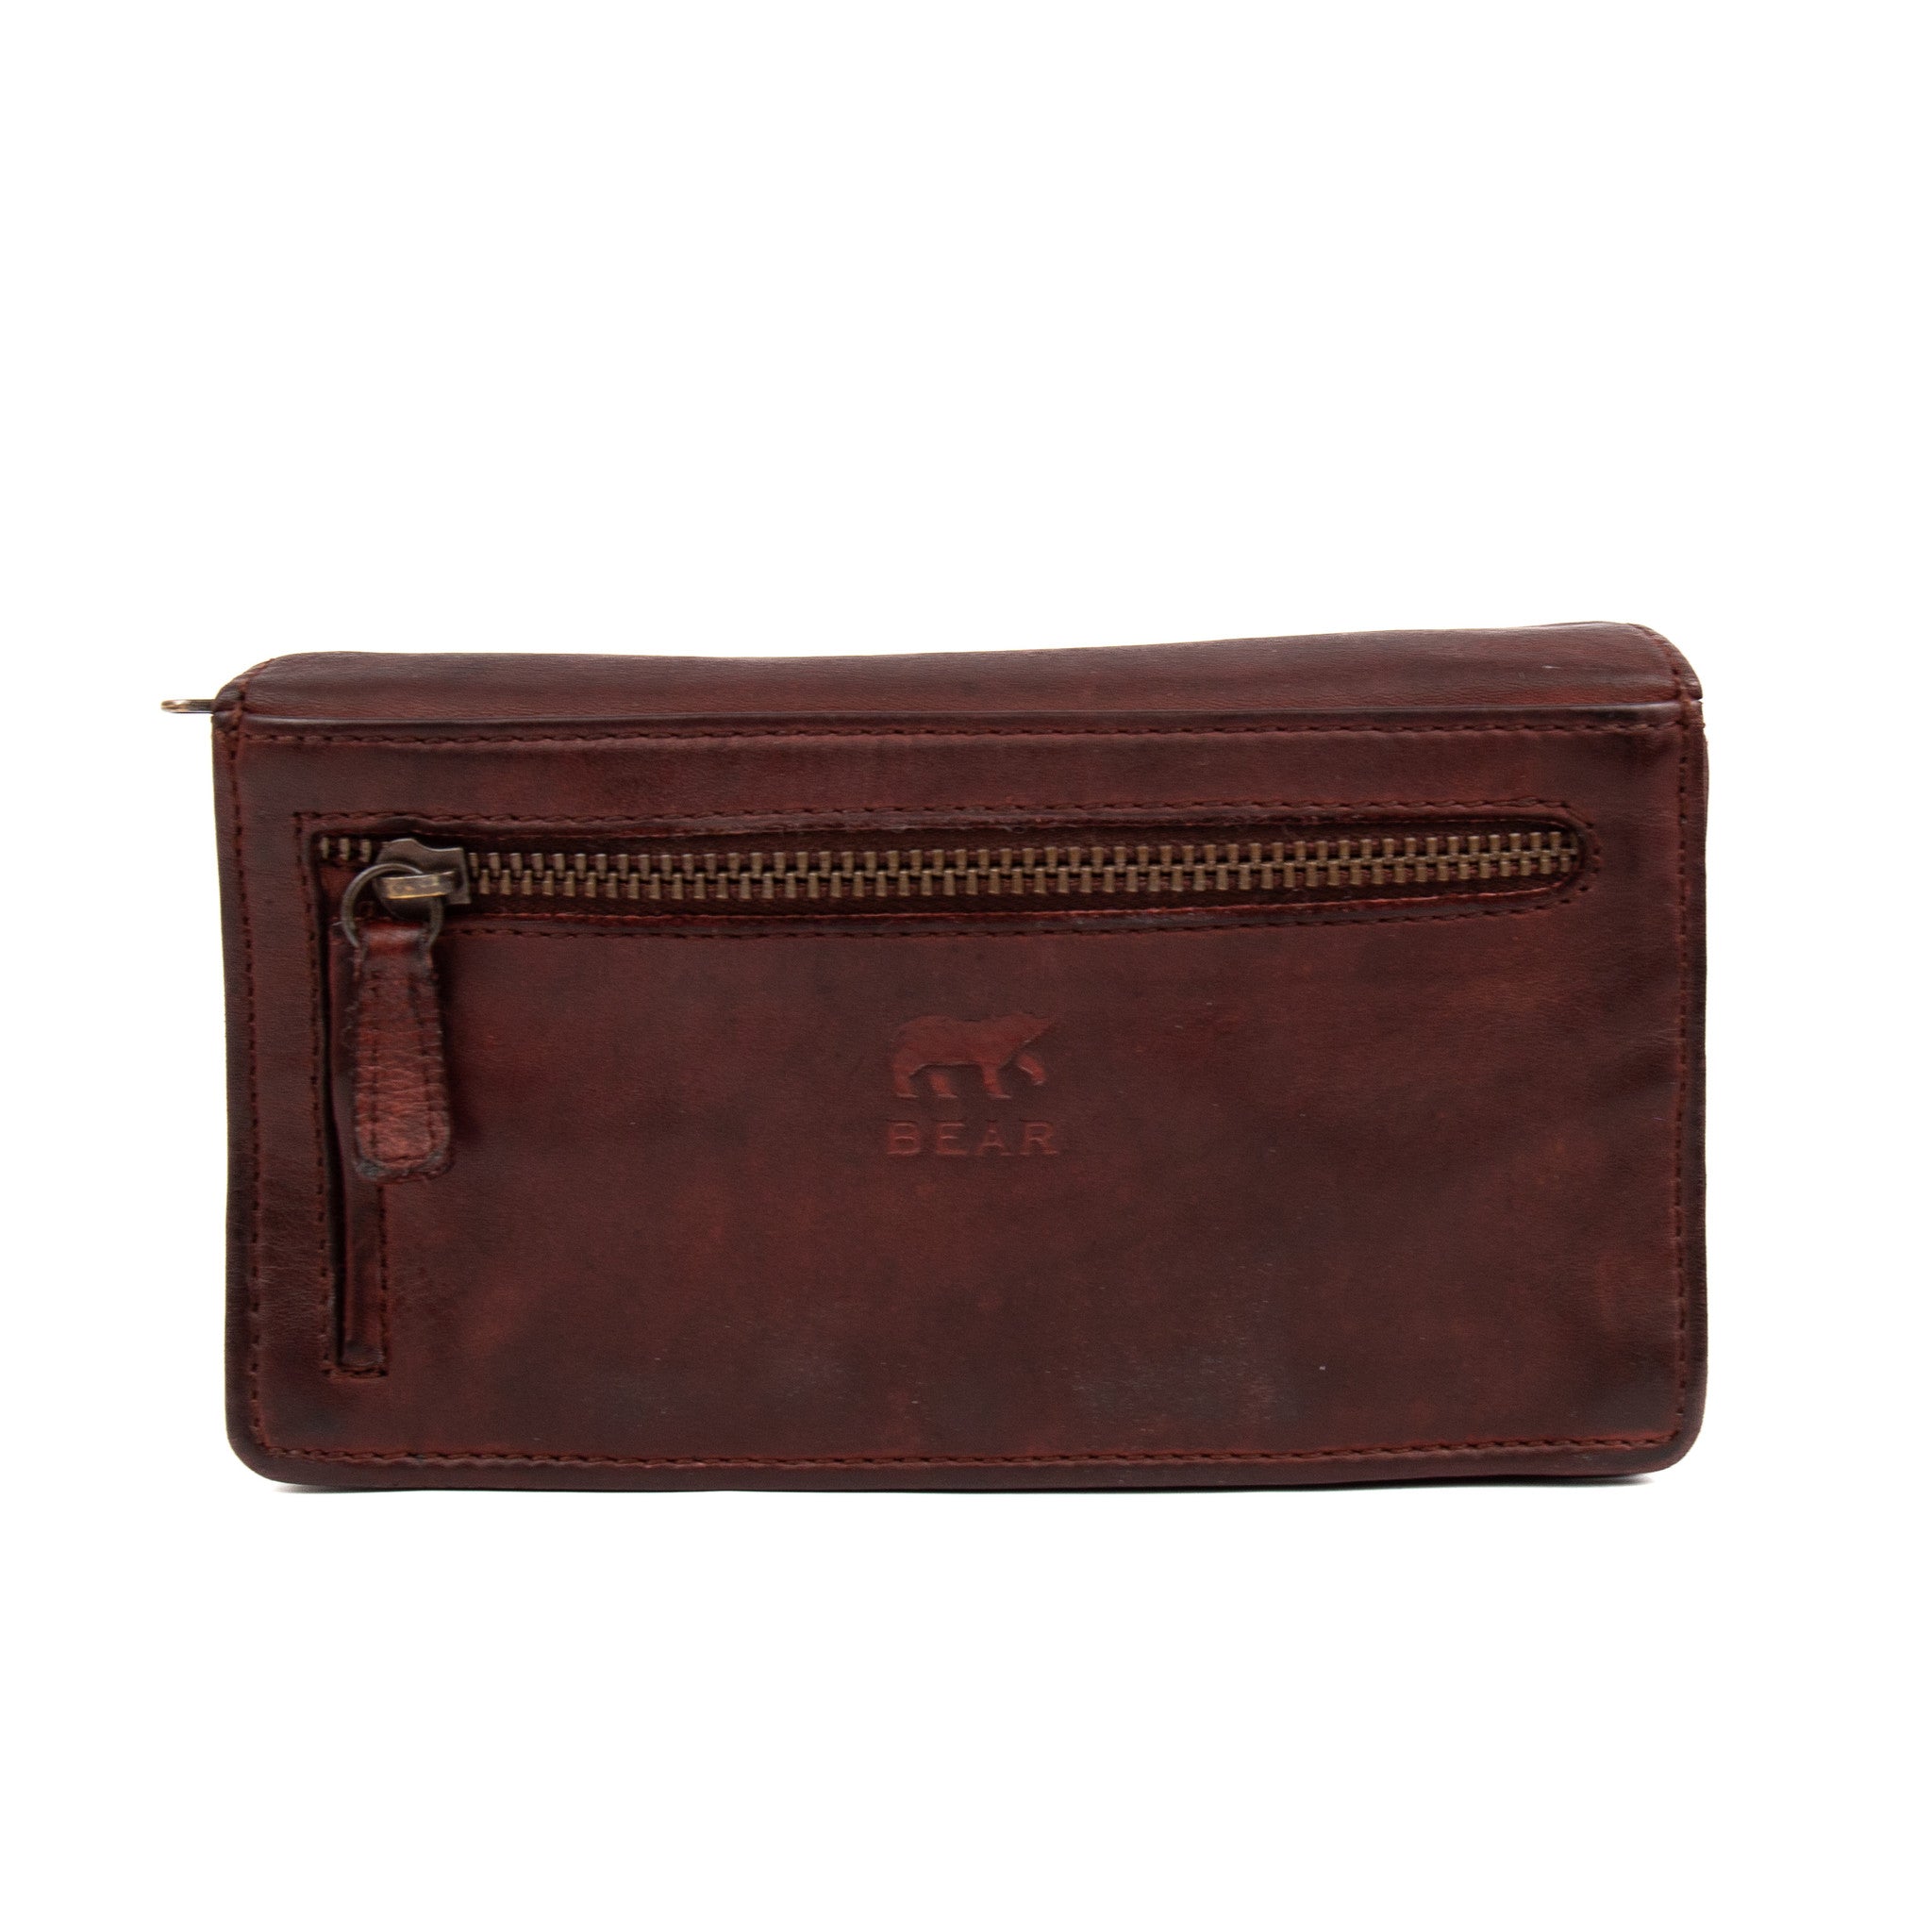 Wrap wallet 'Emma' burgundy - CL 782